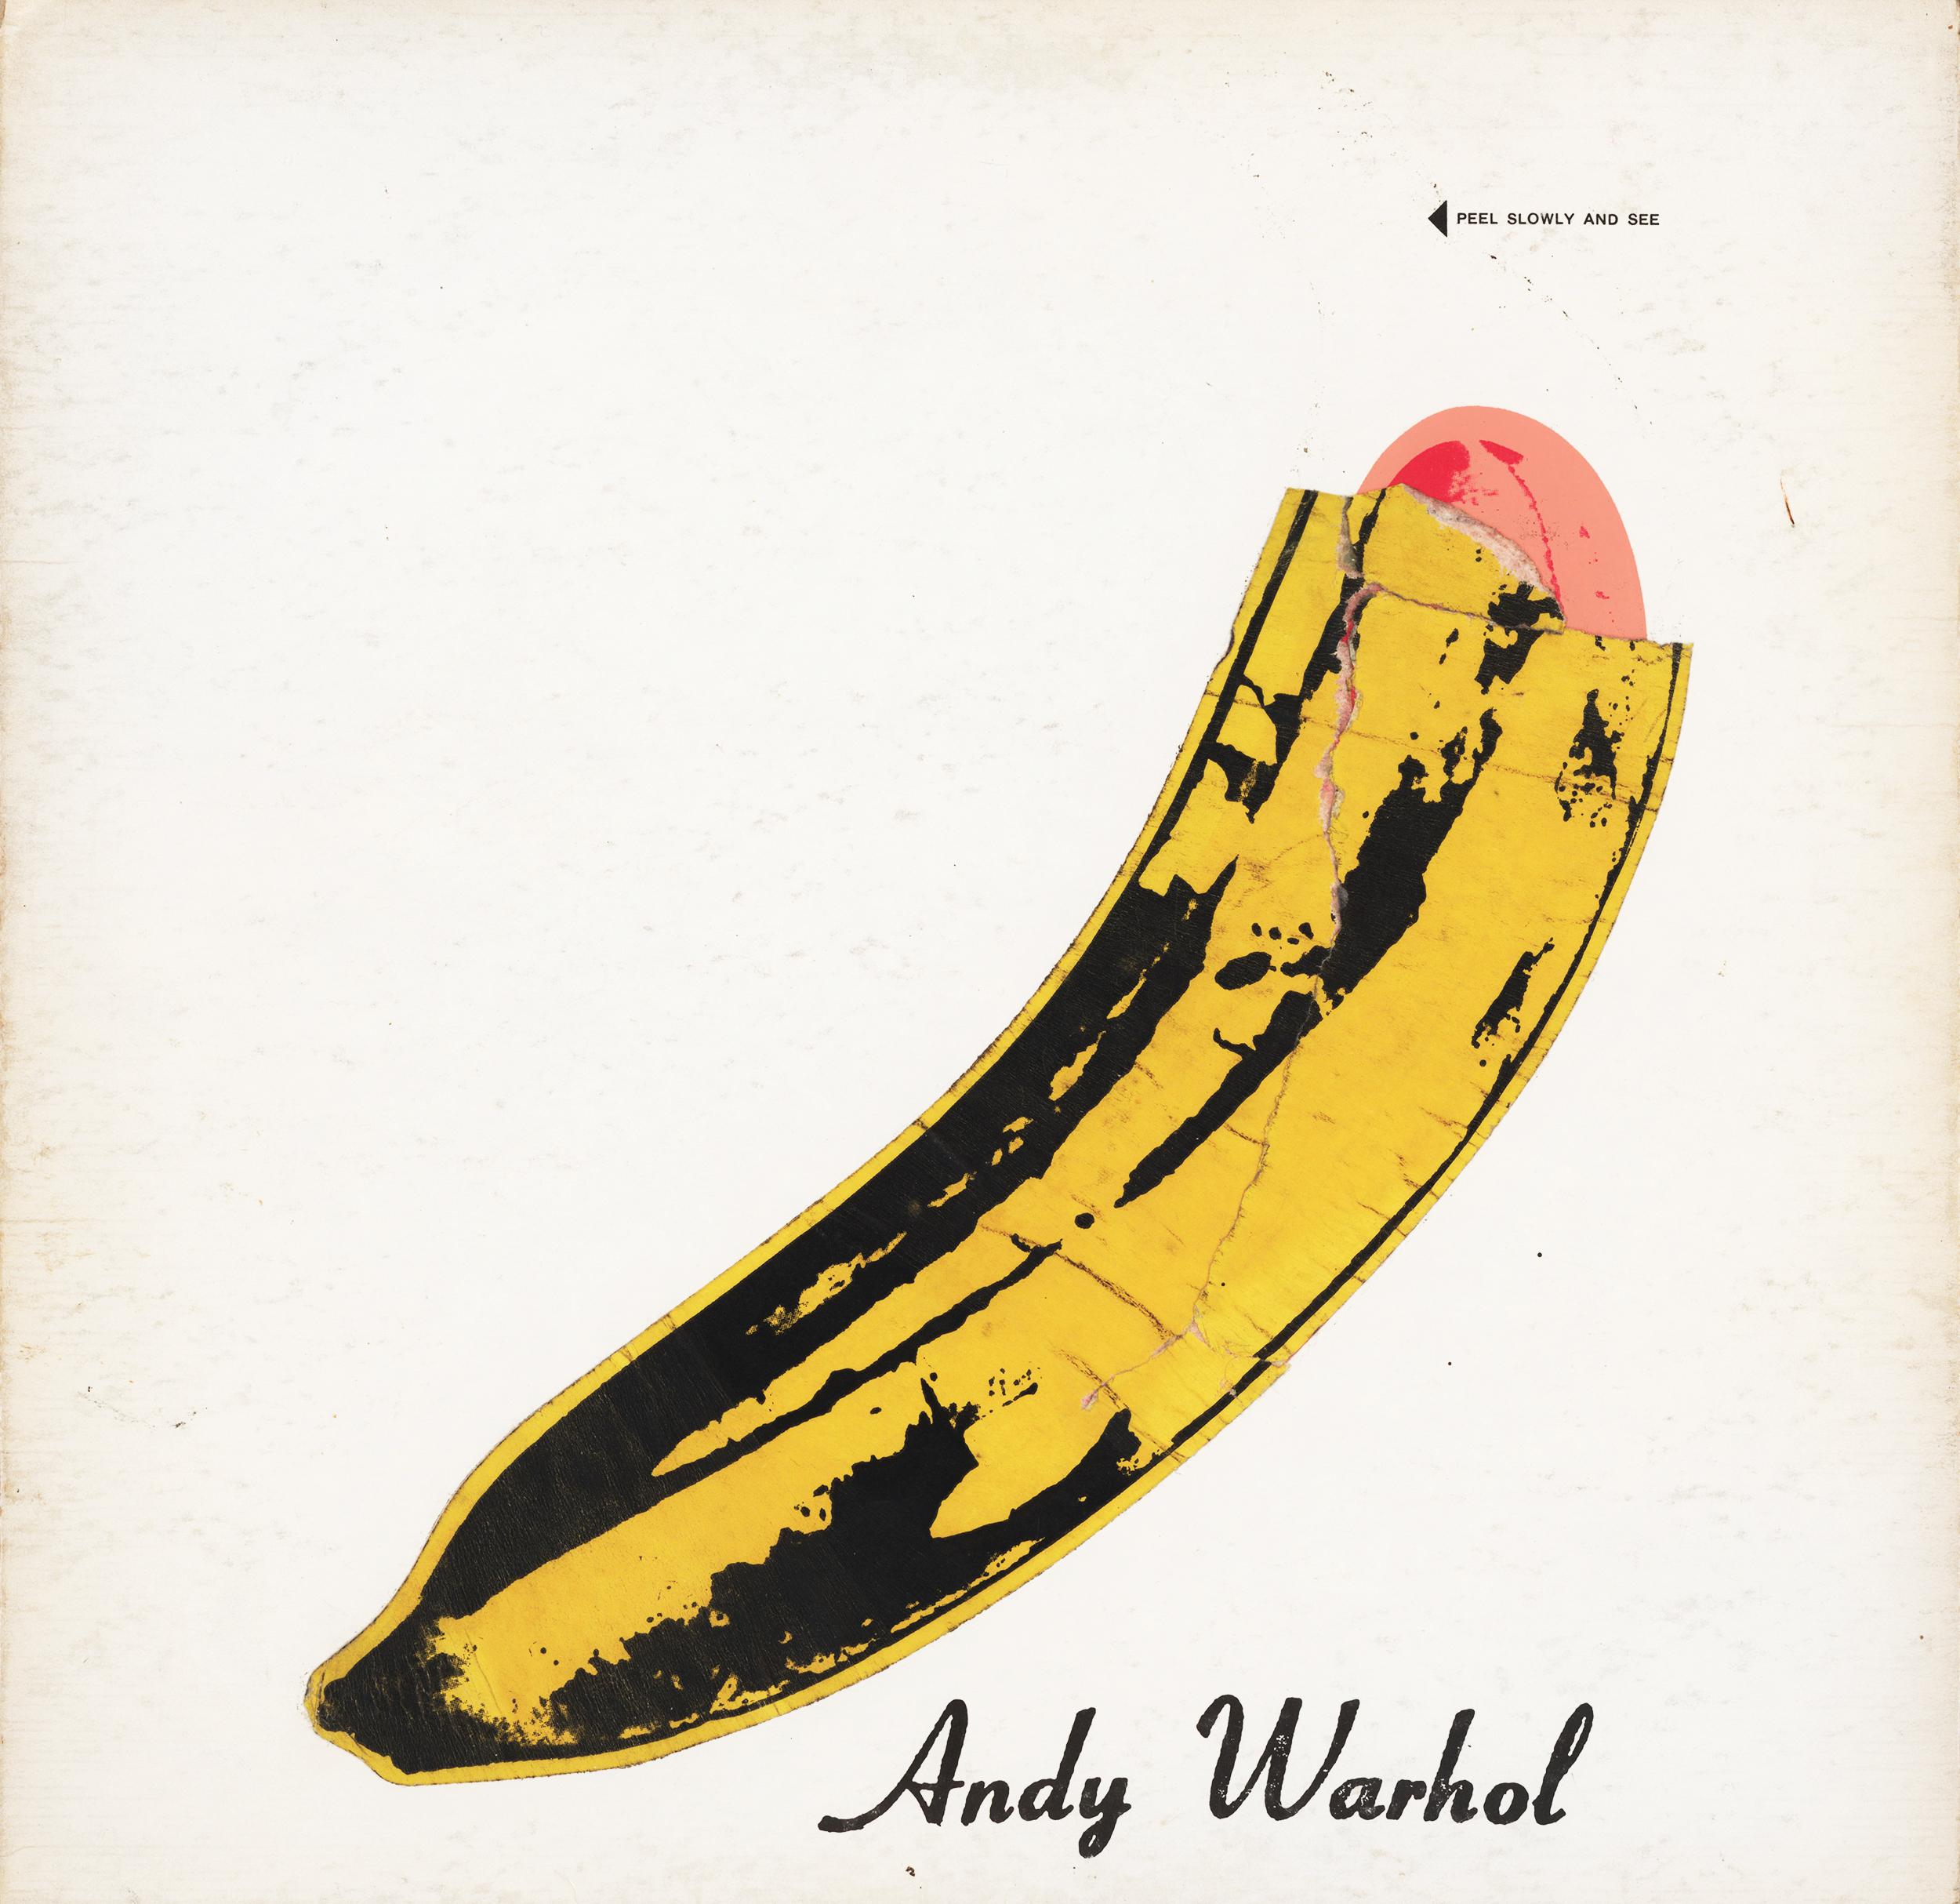 Warhol Banana Cover: Nico & The Velvet Underground Vinyl Record - Print by Andy Warhol